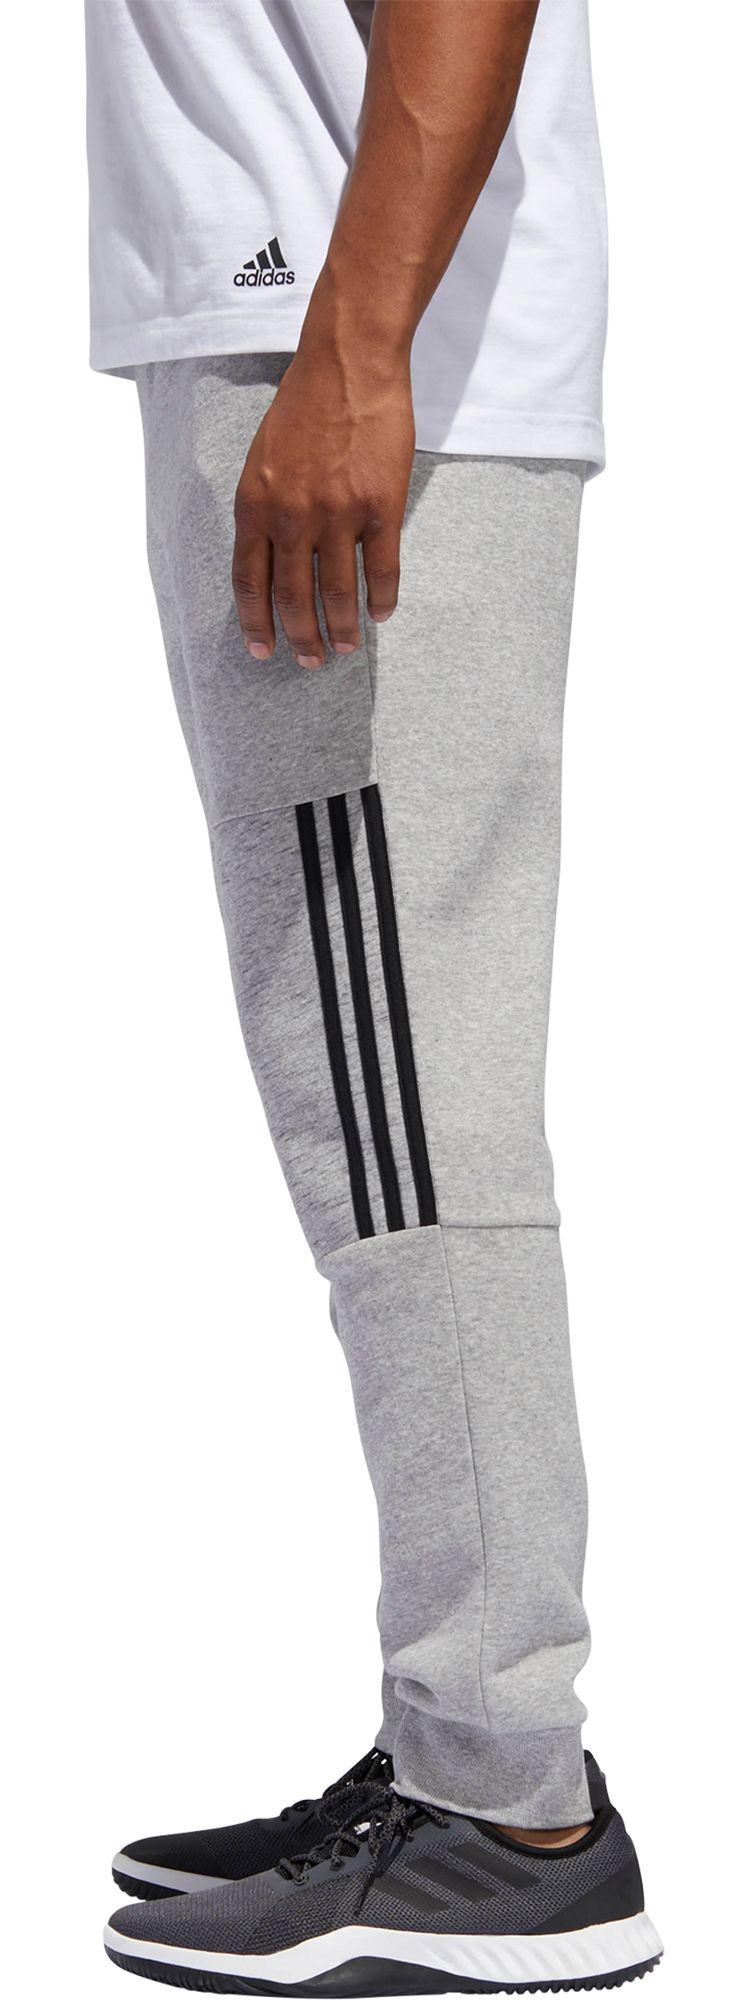 adidas men's post game fleece jogger pants